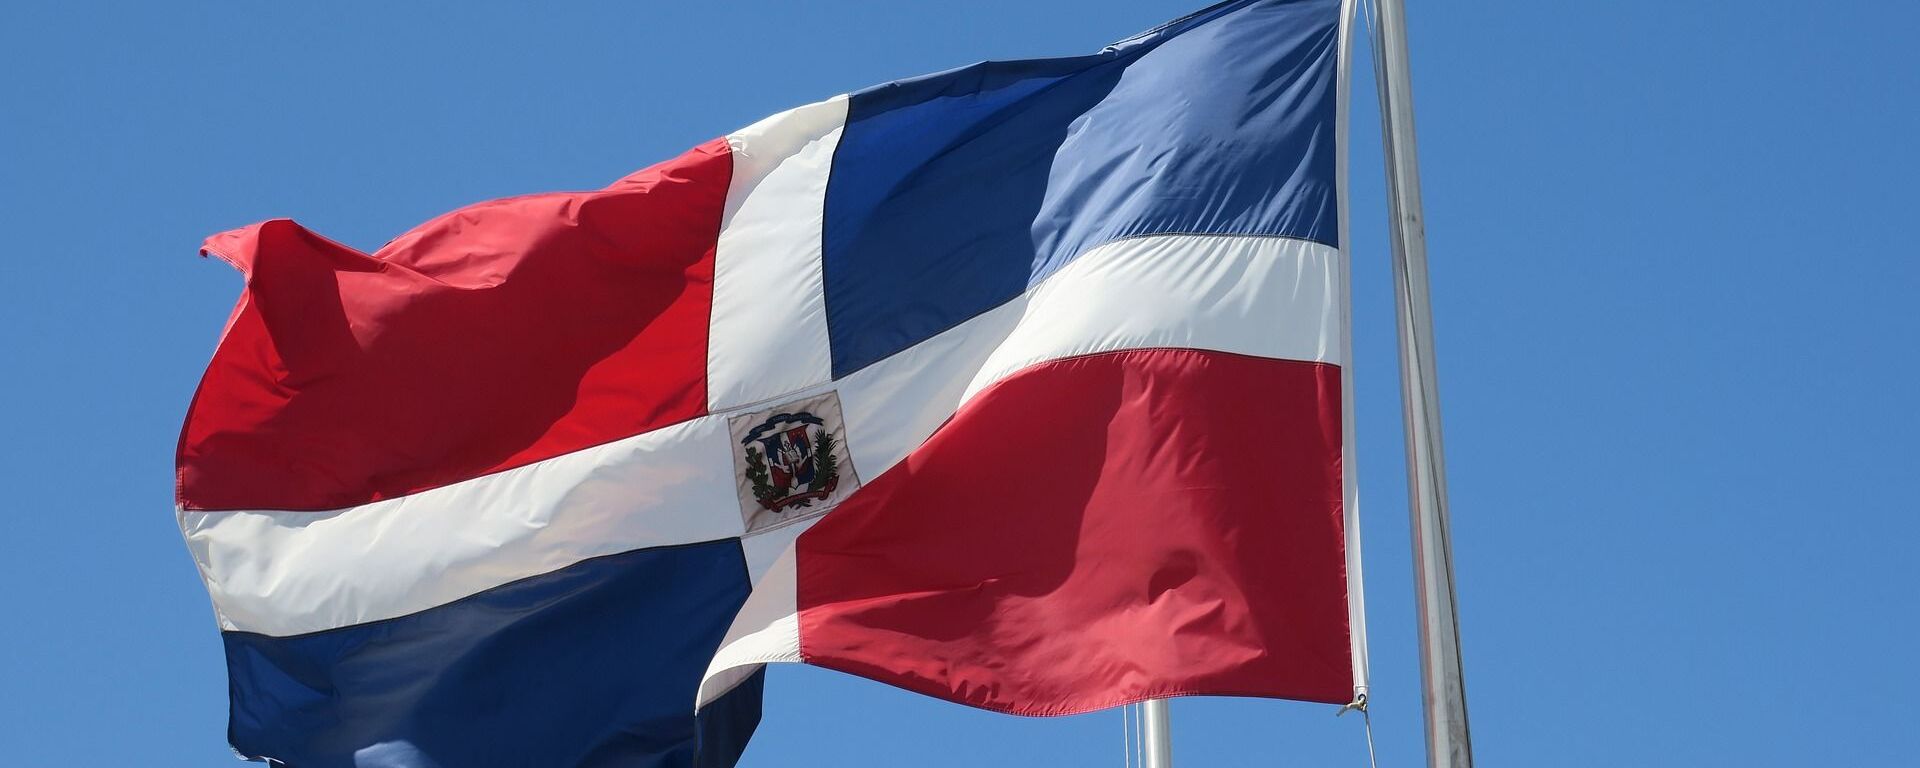 La bandera de la República Dominicana - Sputnik Mundo, 1920, 25.04.2022